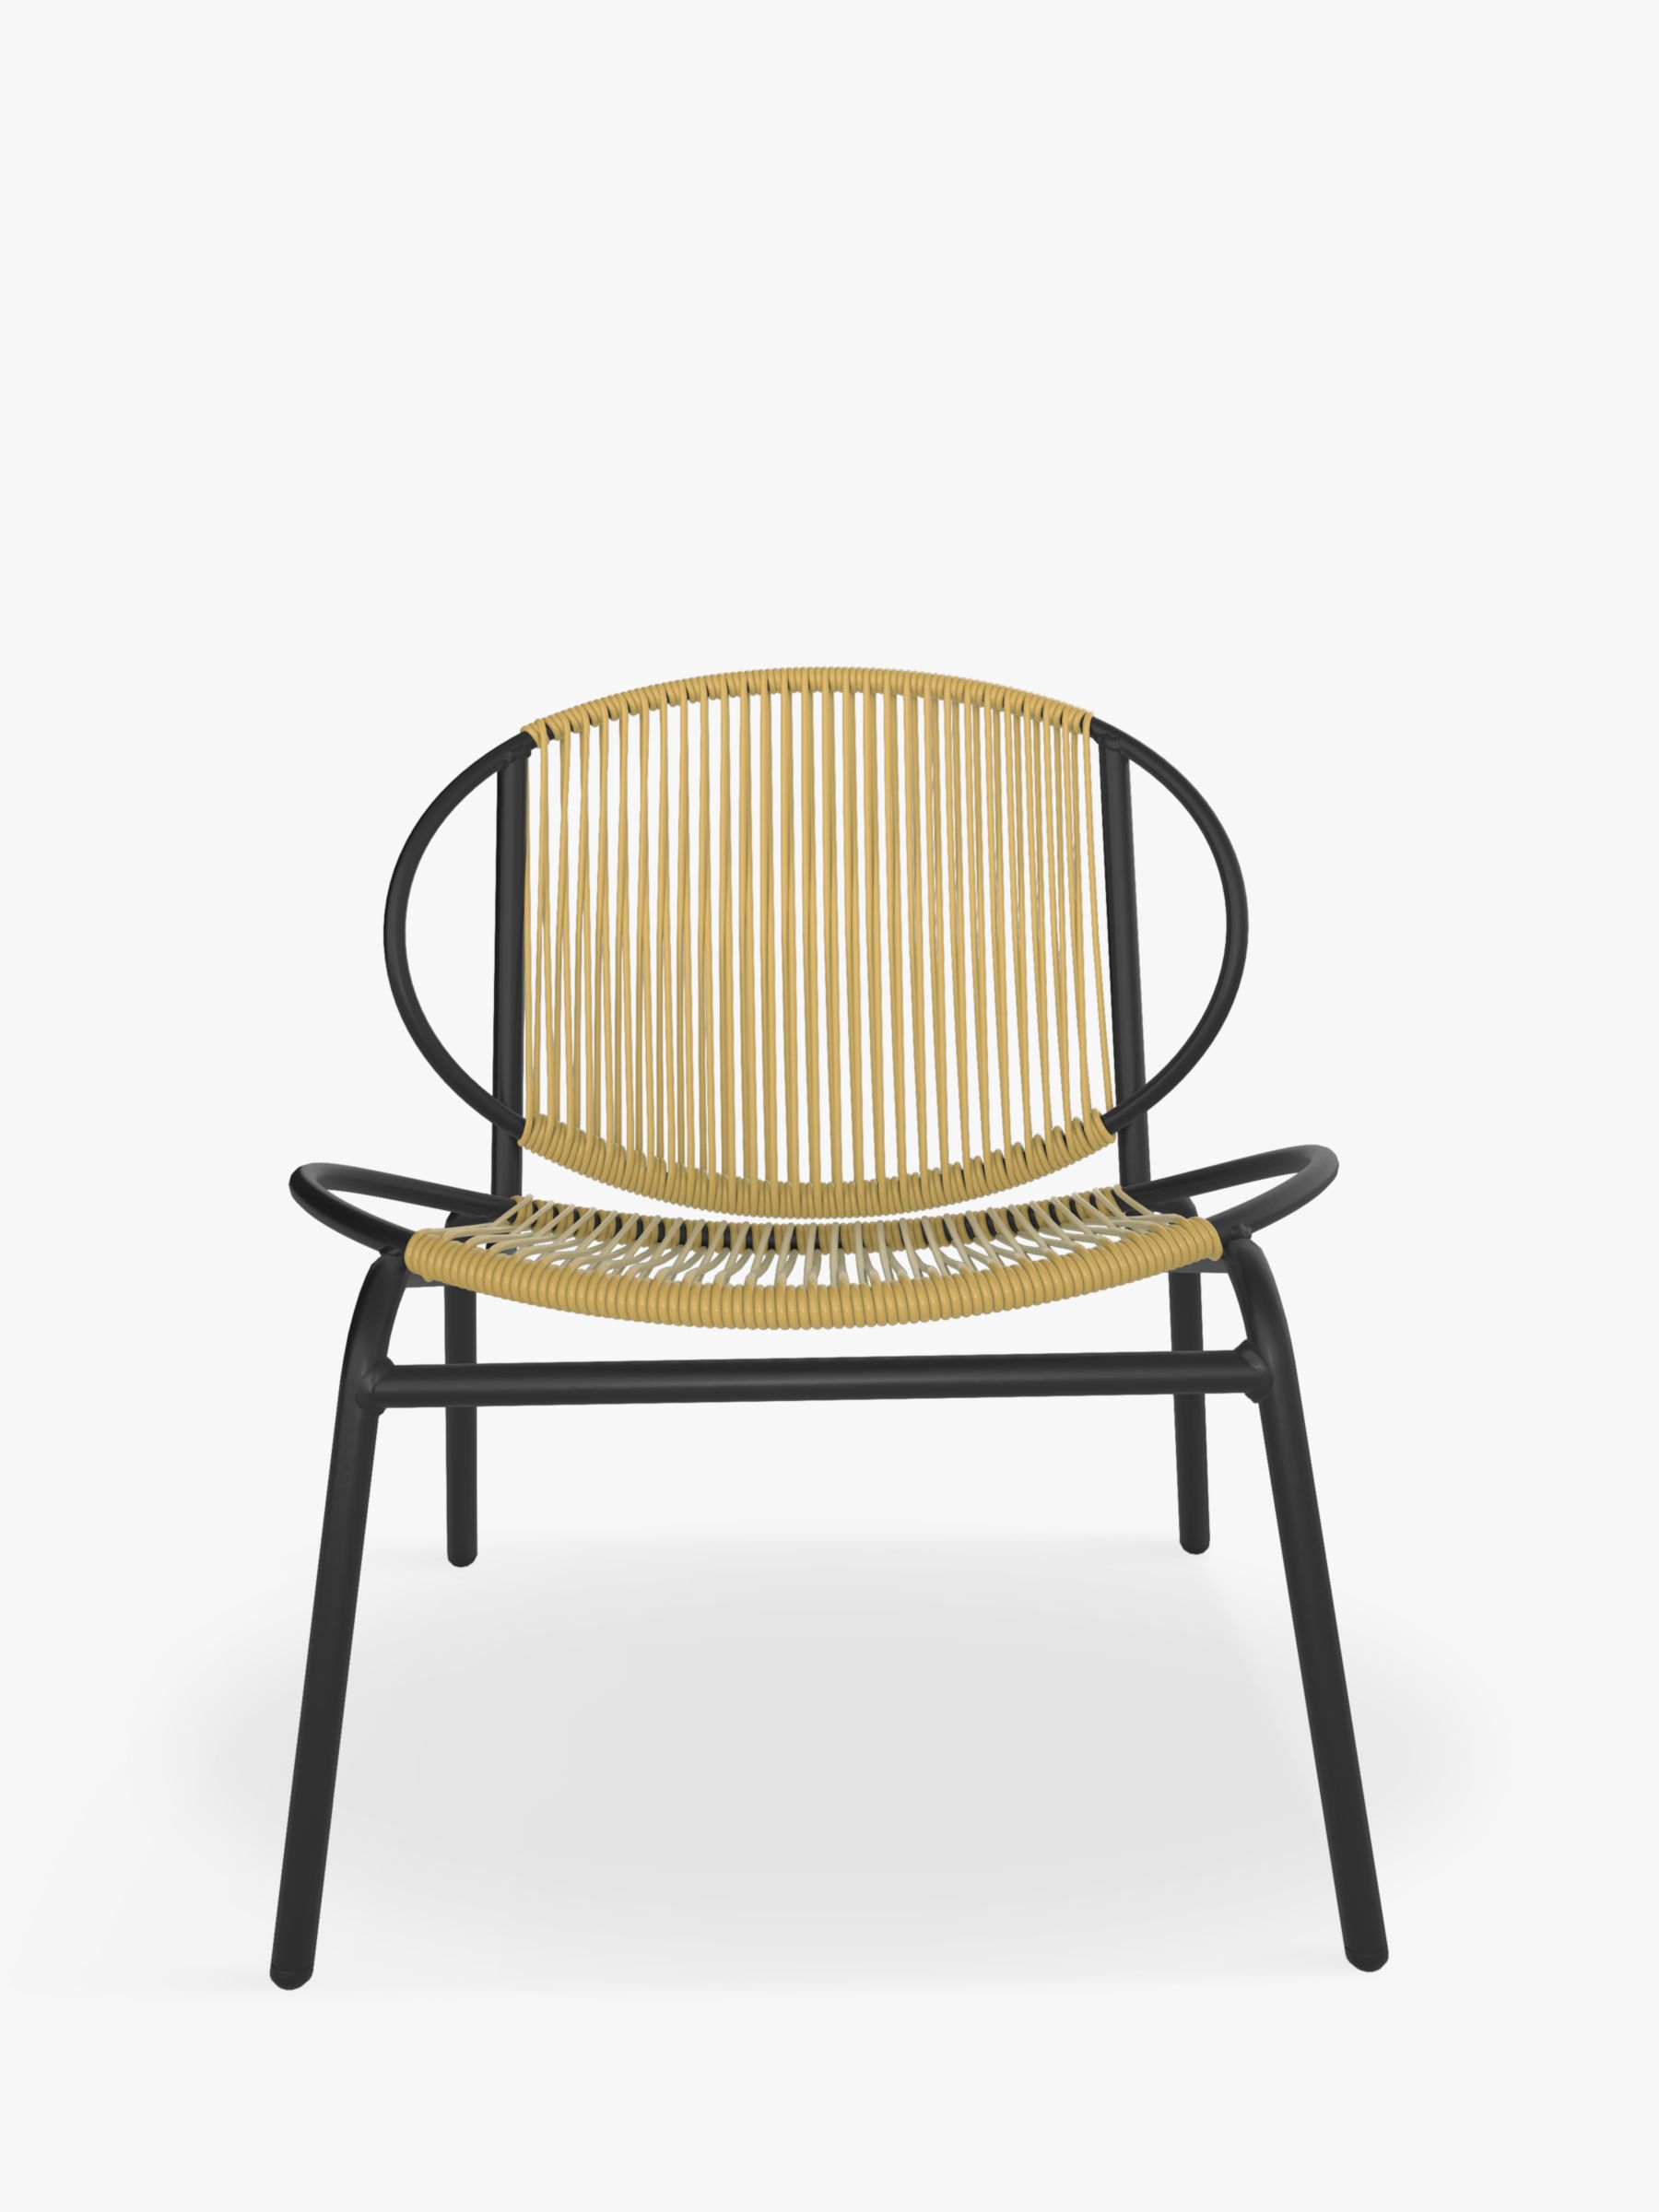 John Lewis & Partners Ellipse Garden Lounging Chairs, Set of 2